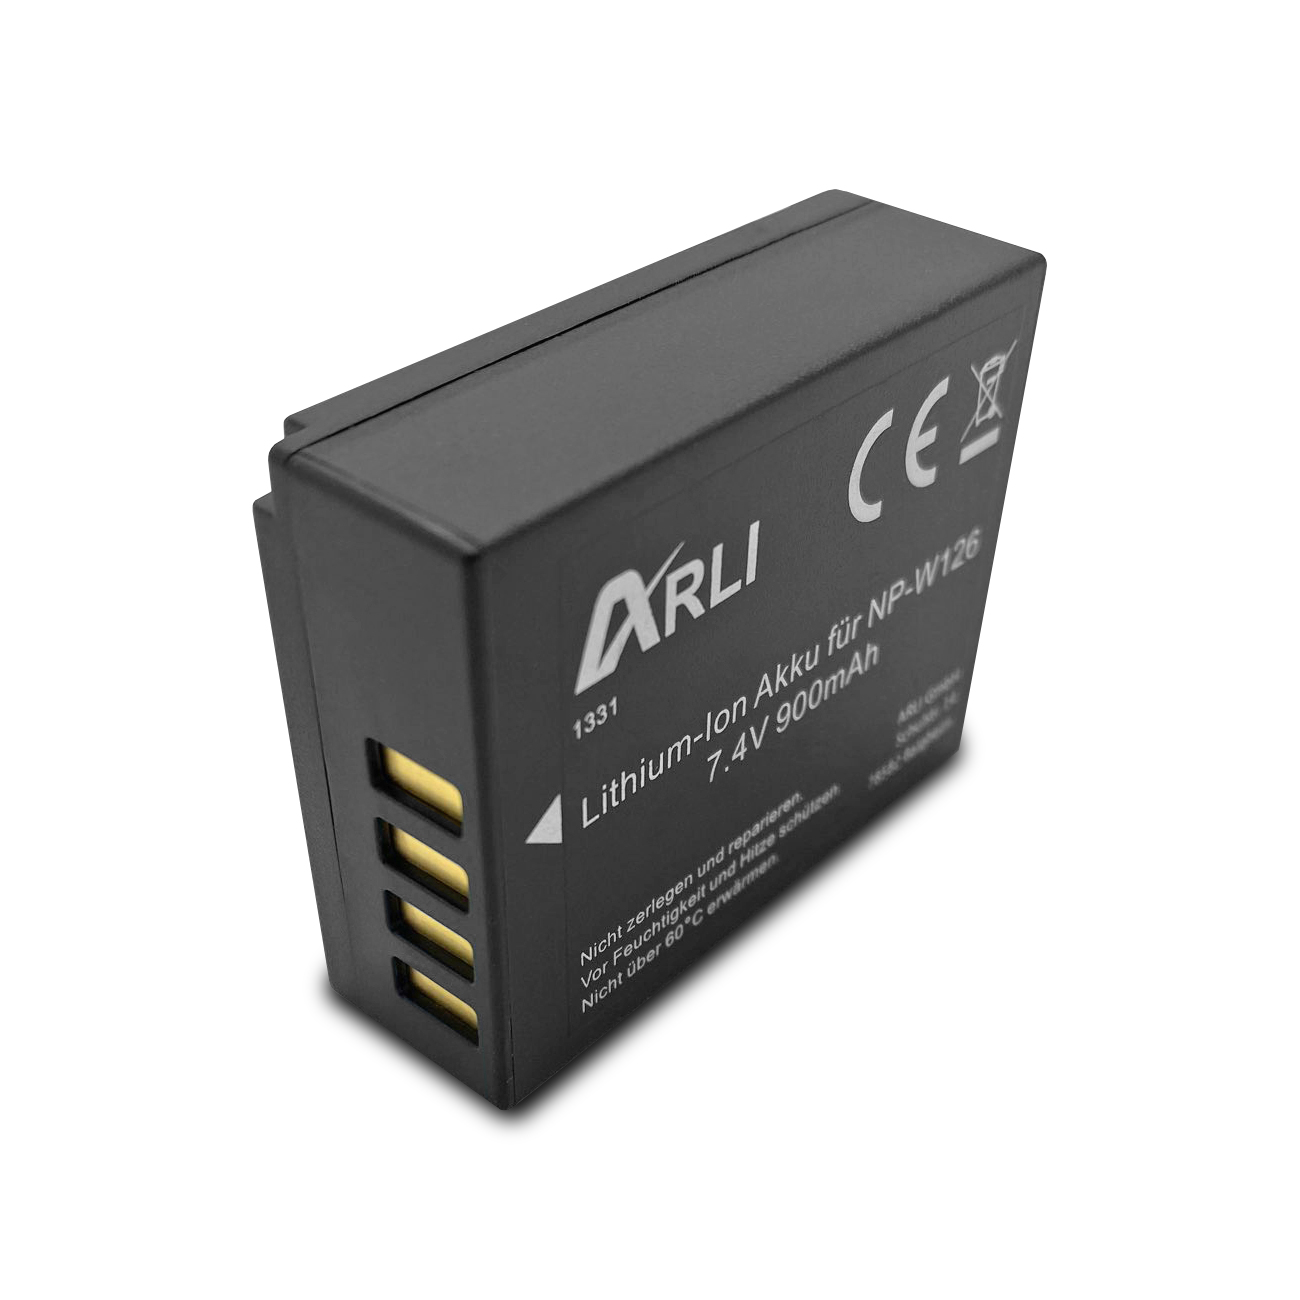 ARLI 2x LP-E12 Ladegerät mAh Set, für Li-Ion Akku 600 Stück 7.4 2 + Volt, Akku Canon